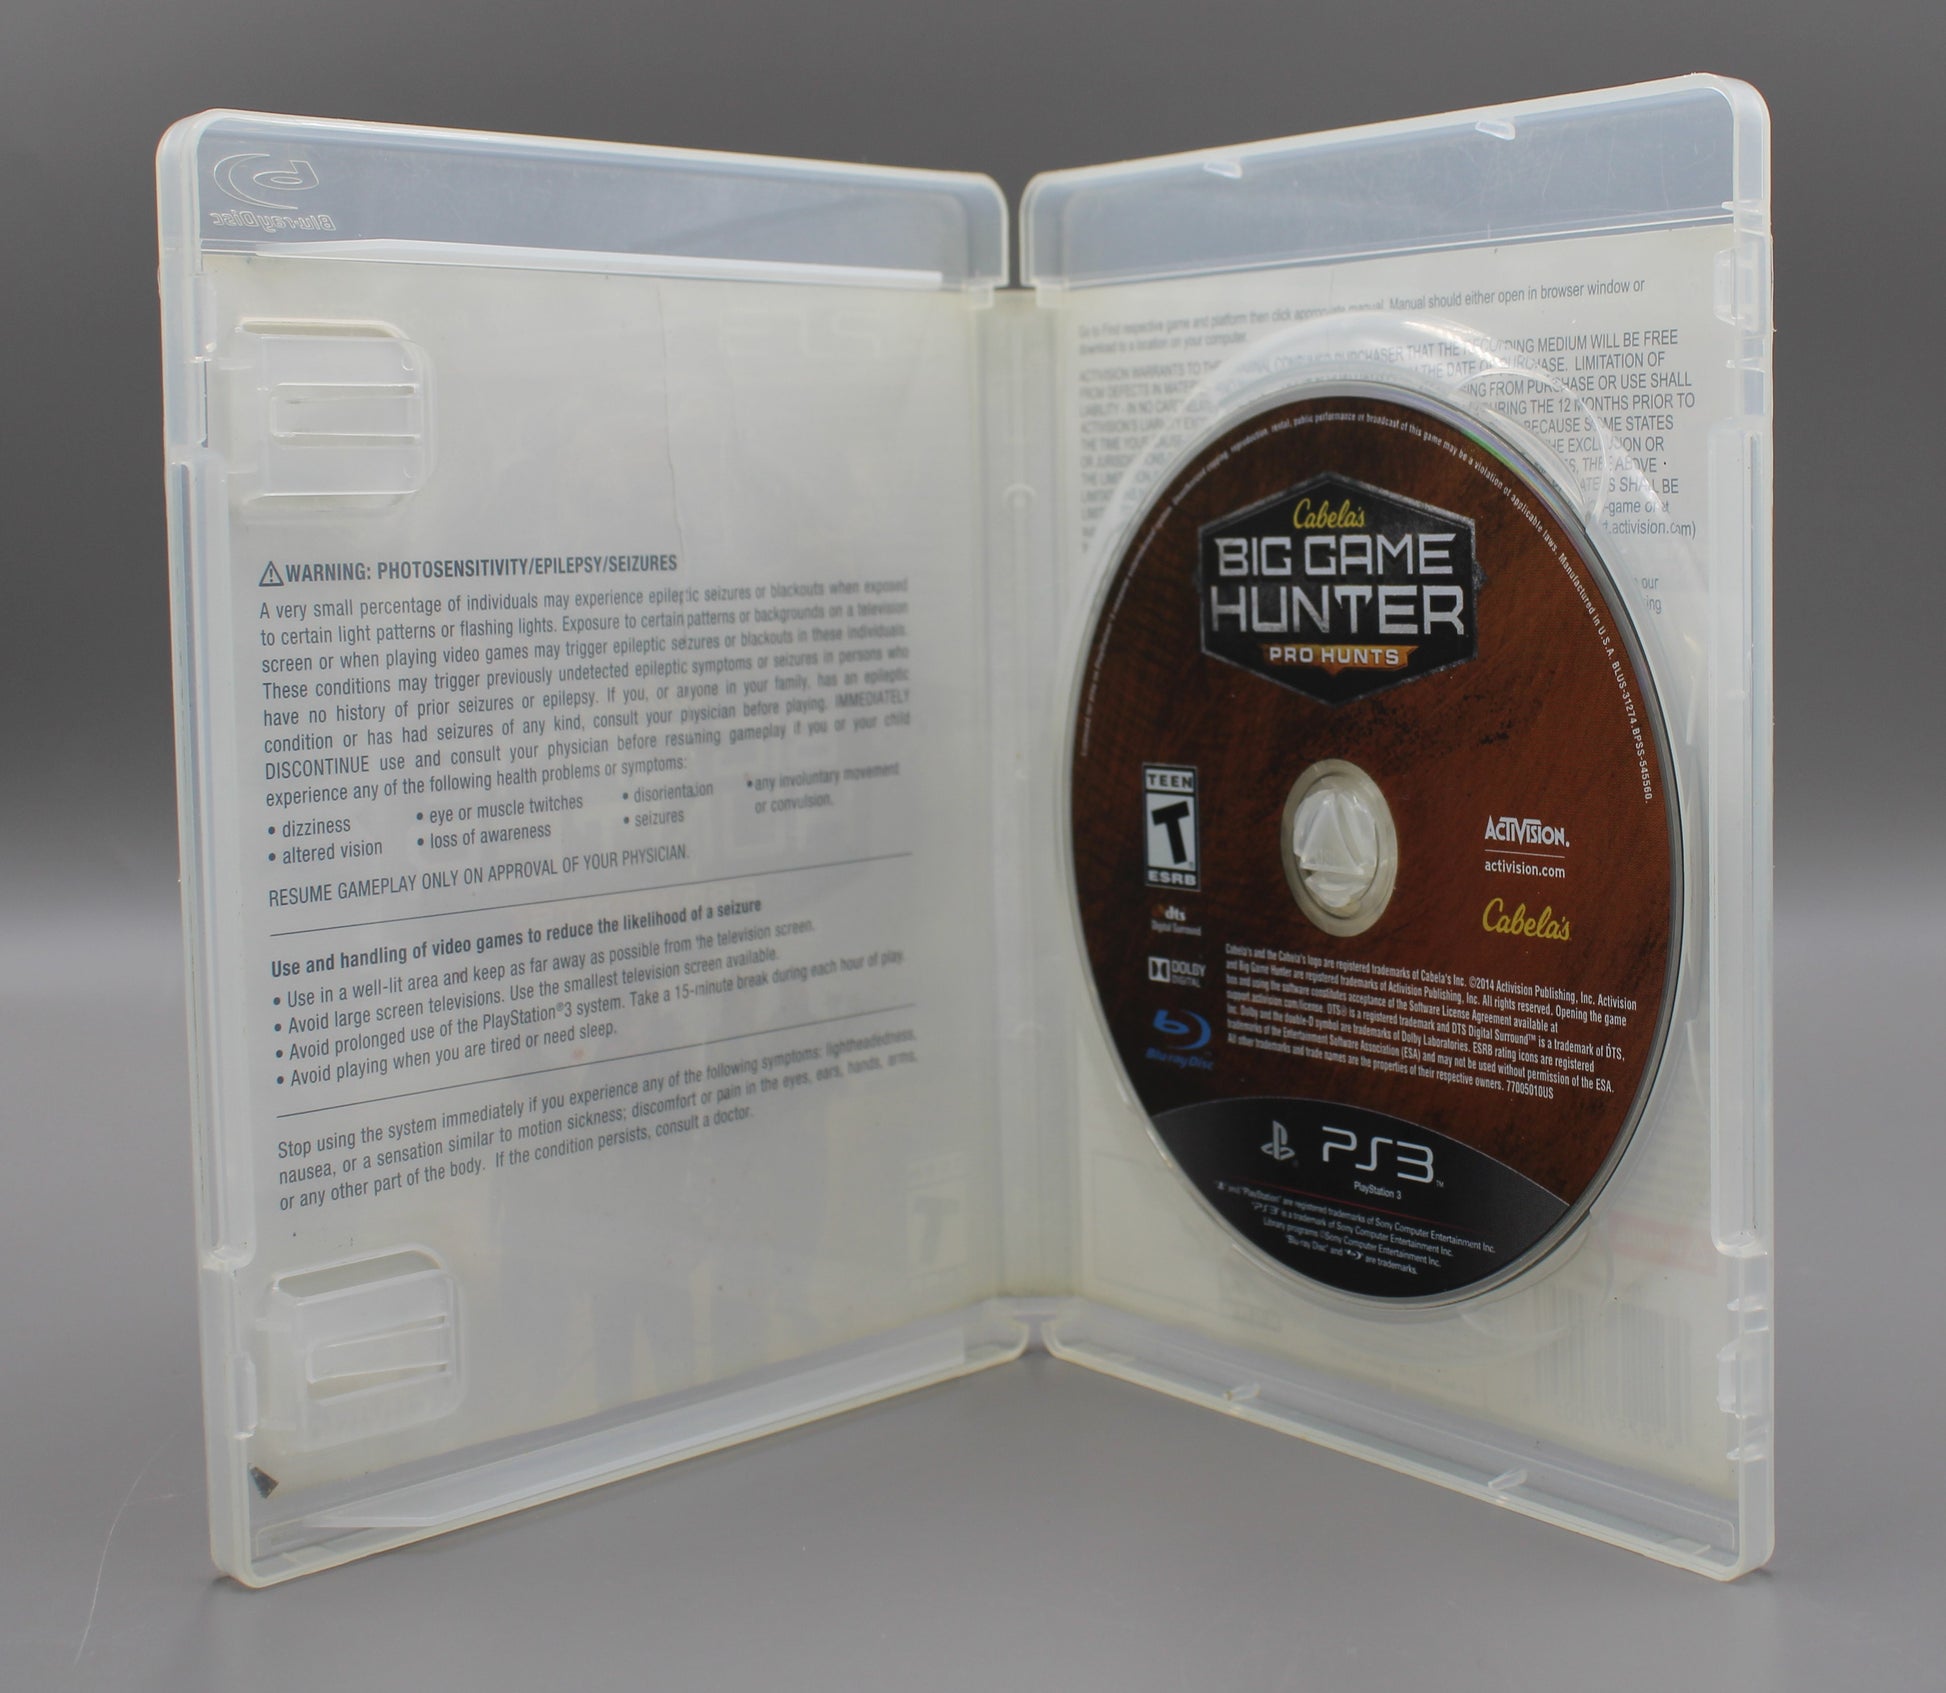 Cabela's Big Game Hunter: Pro Hunts (Sony PlayStation 3, PS3) No Manual